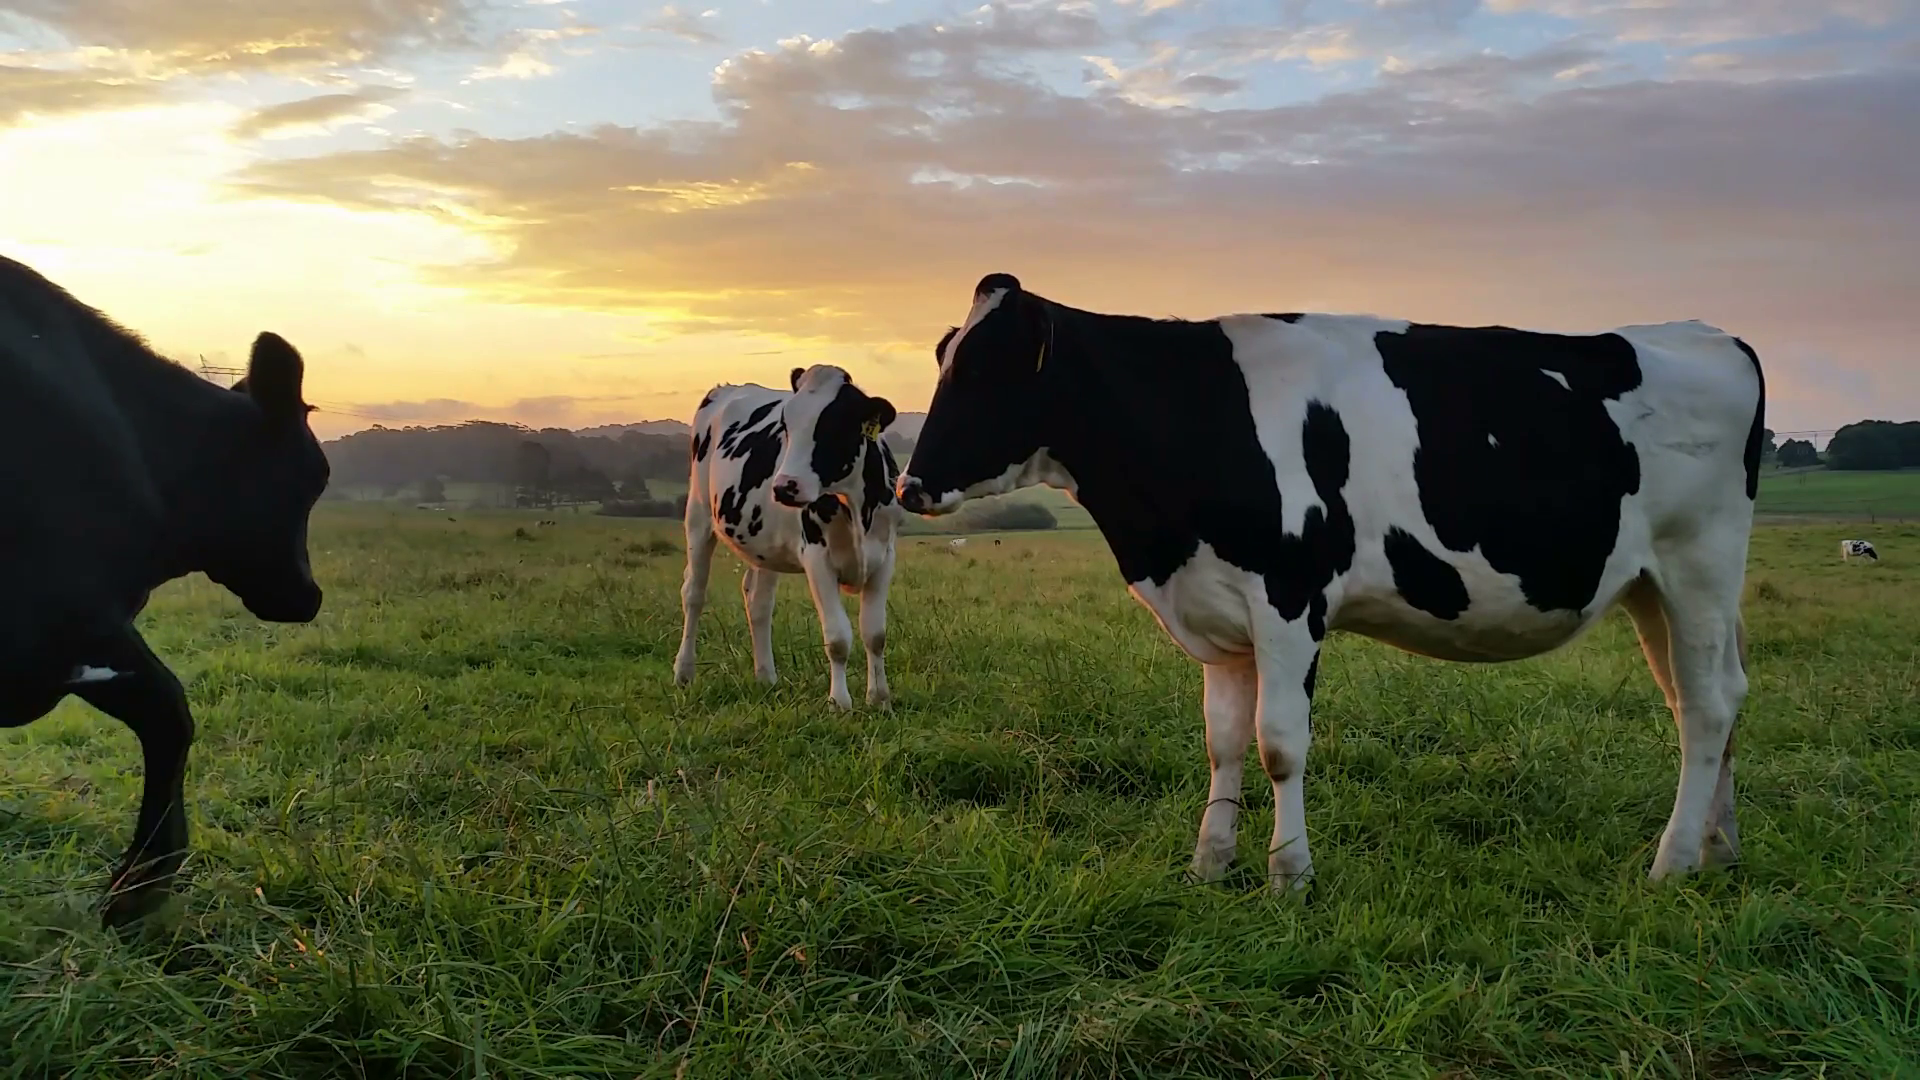 Holstein Friesian cattle Clip